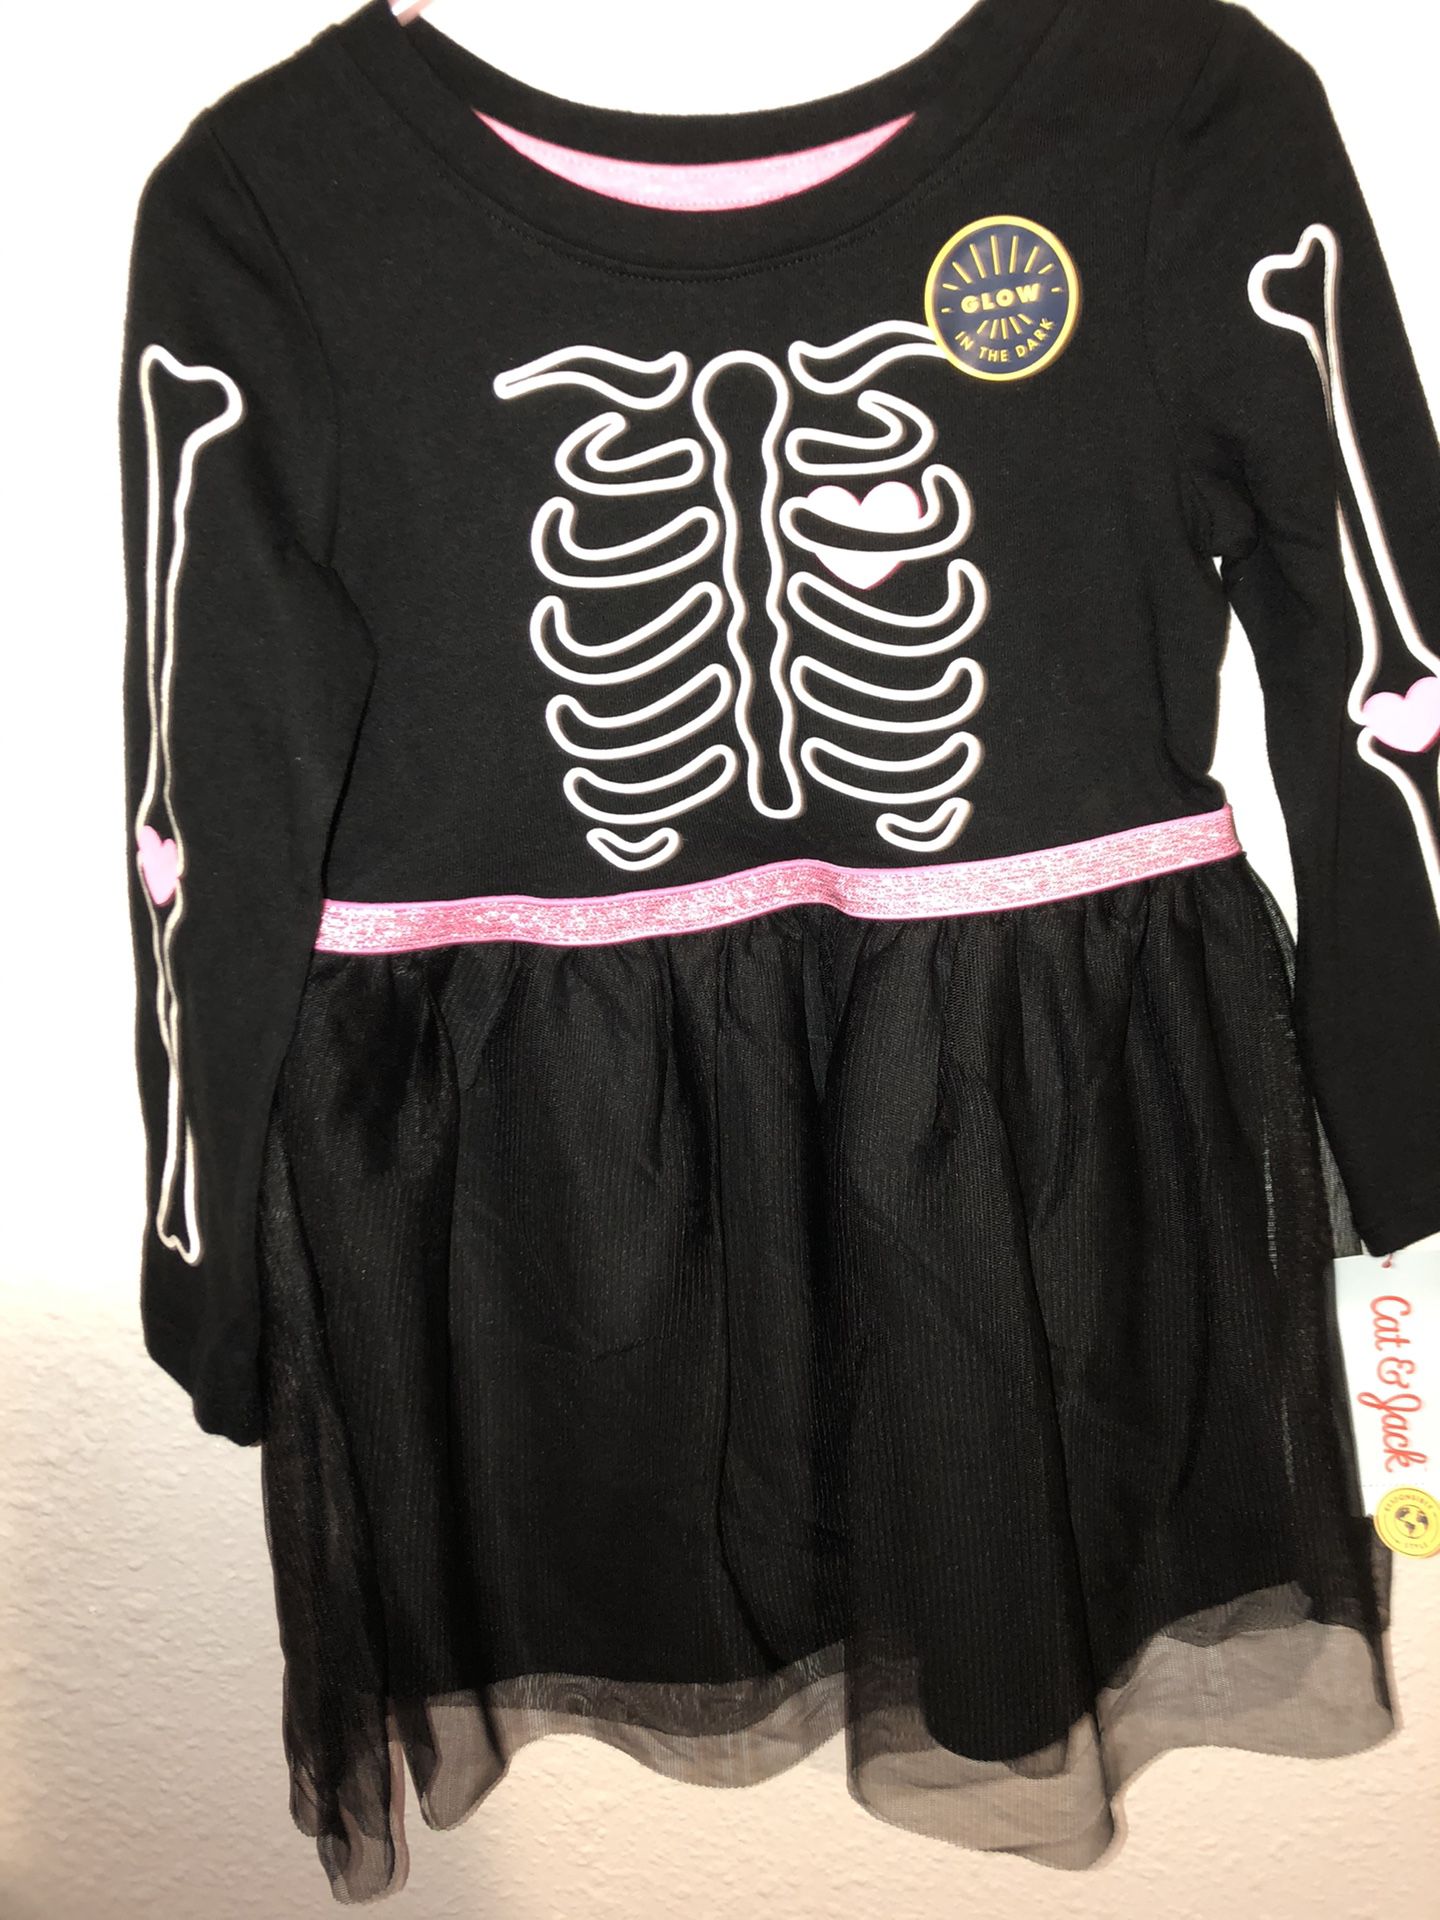 Cat & Jack girls Skeleton dress 3t